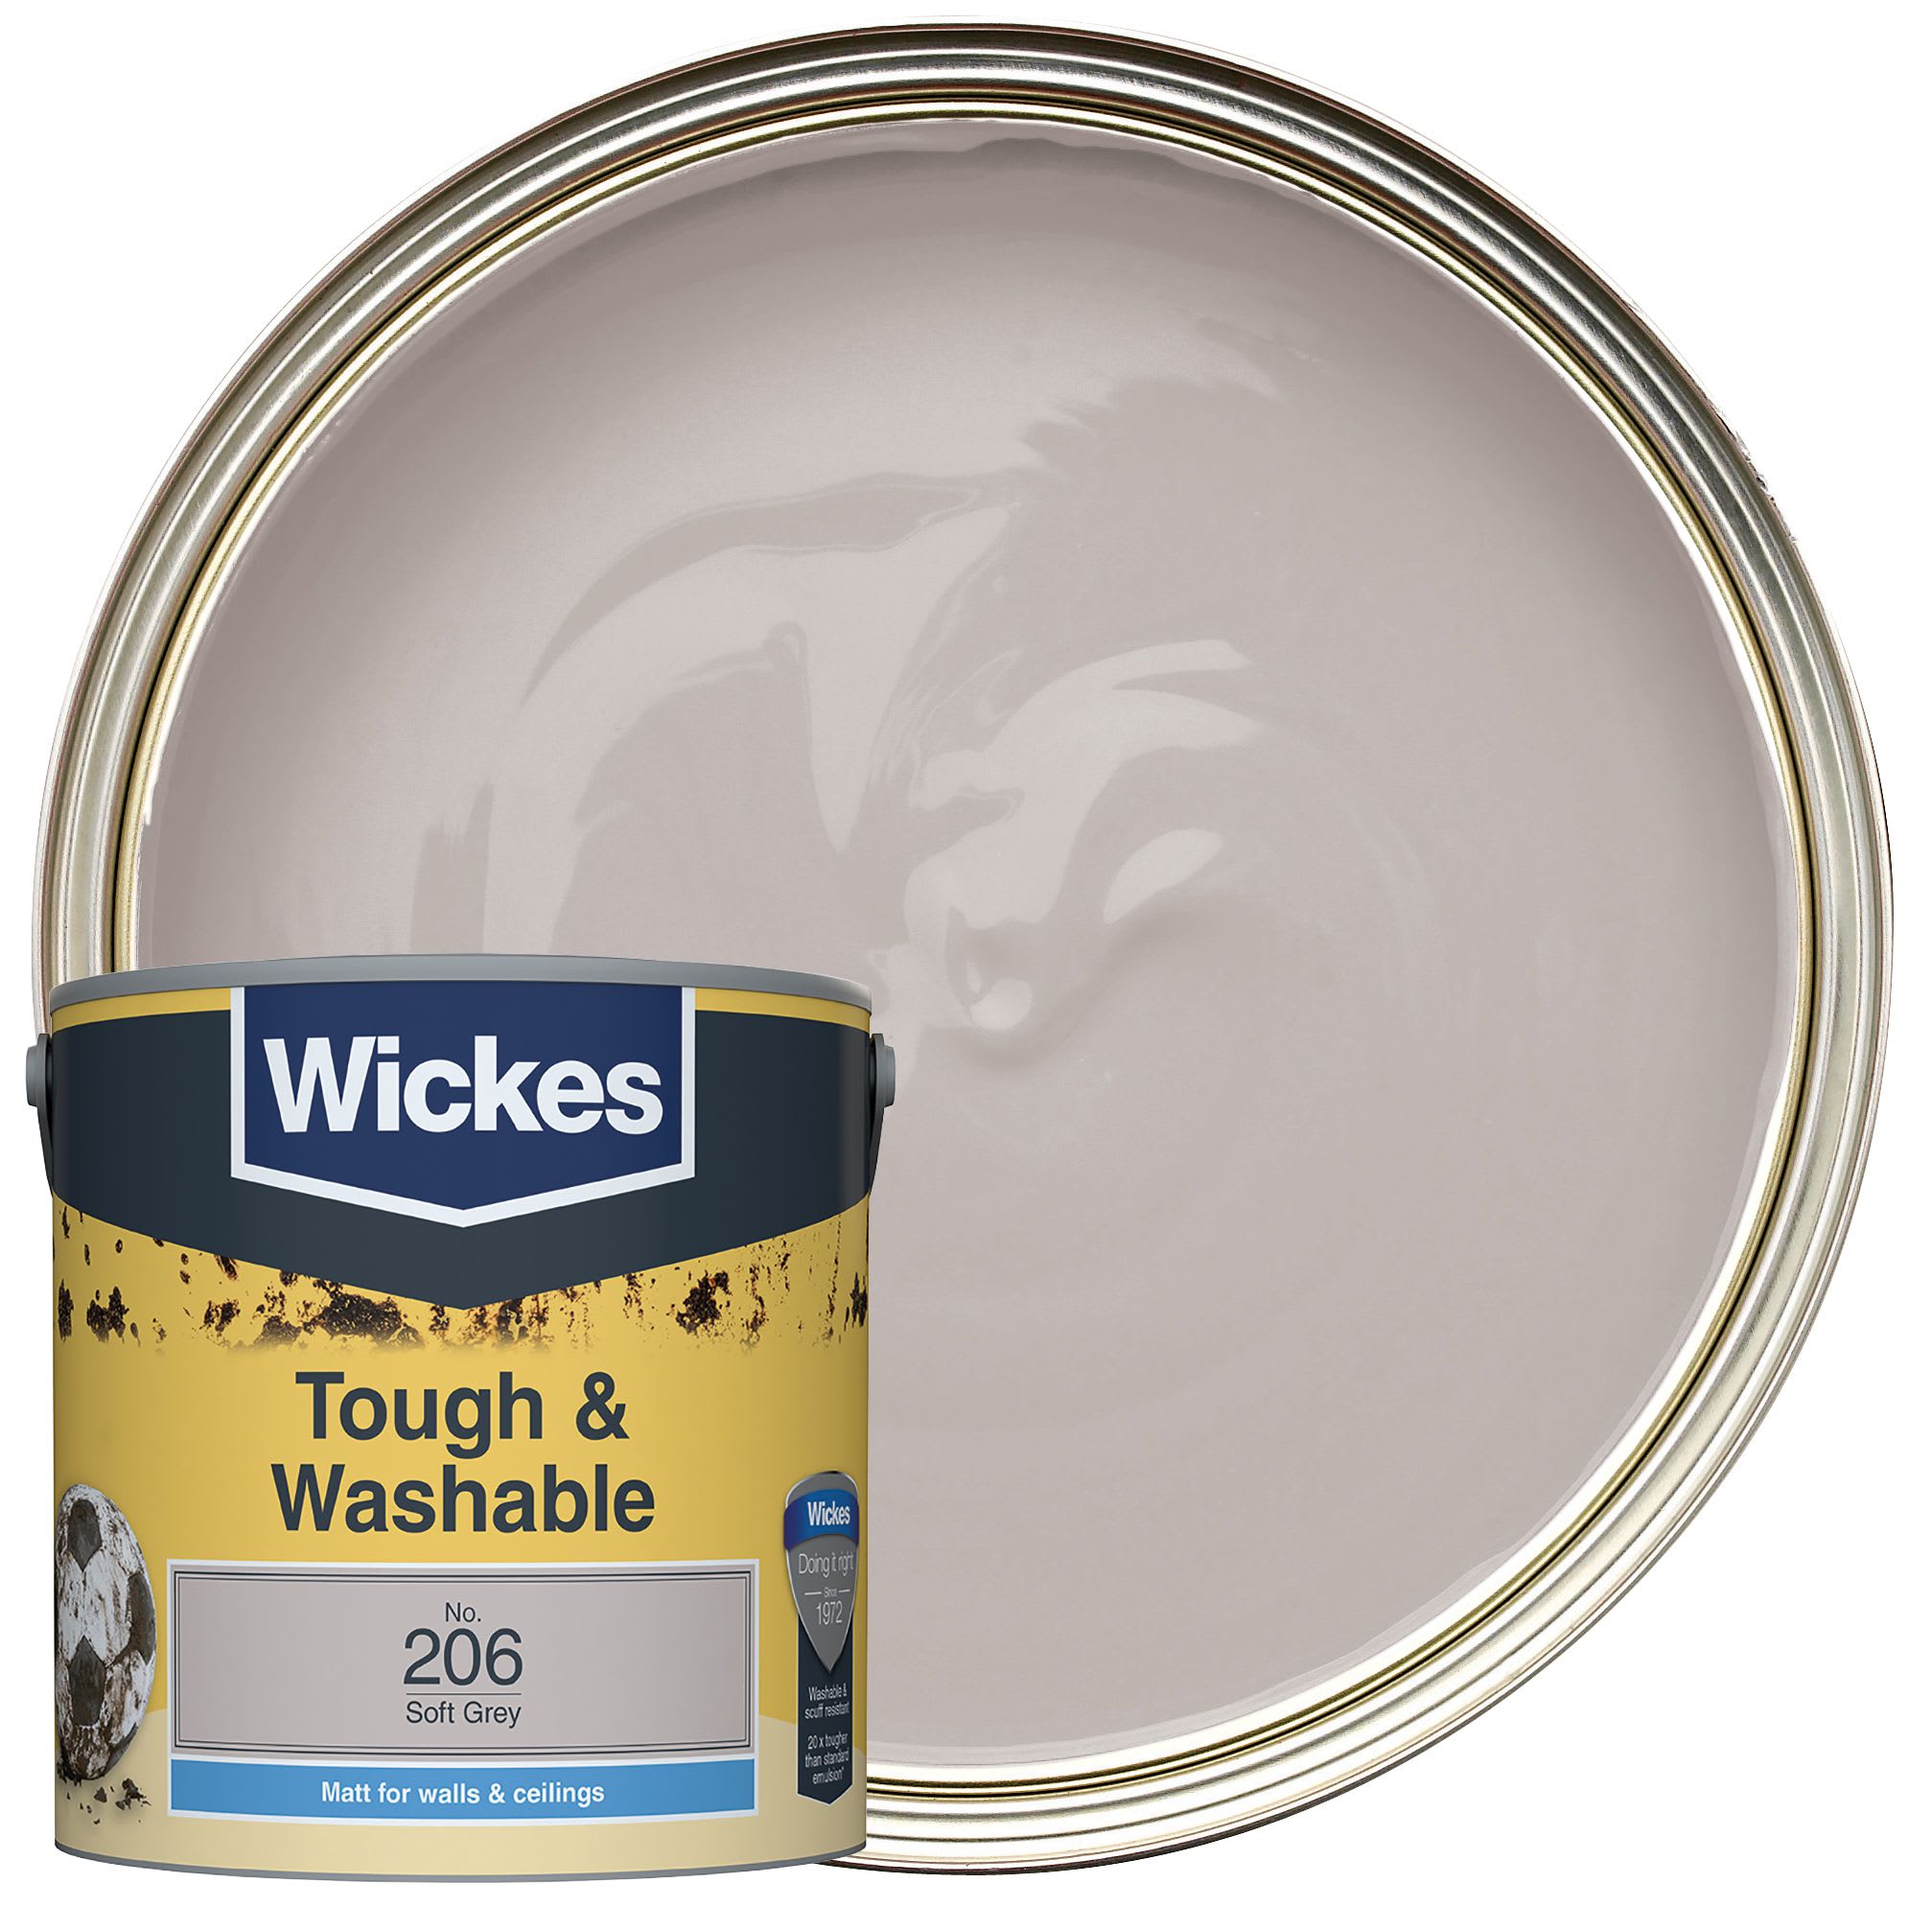 Wickes Soft Grey - No. 206 Tough &